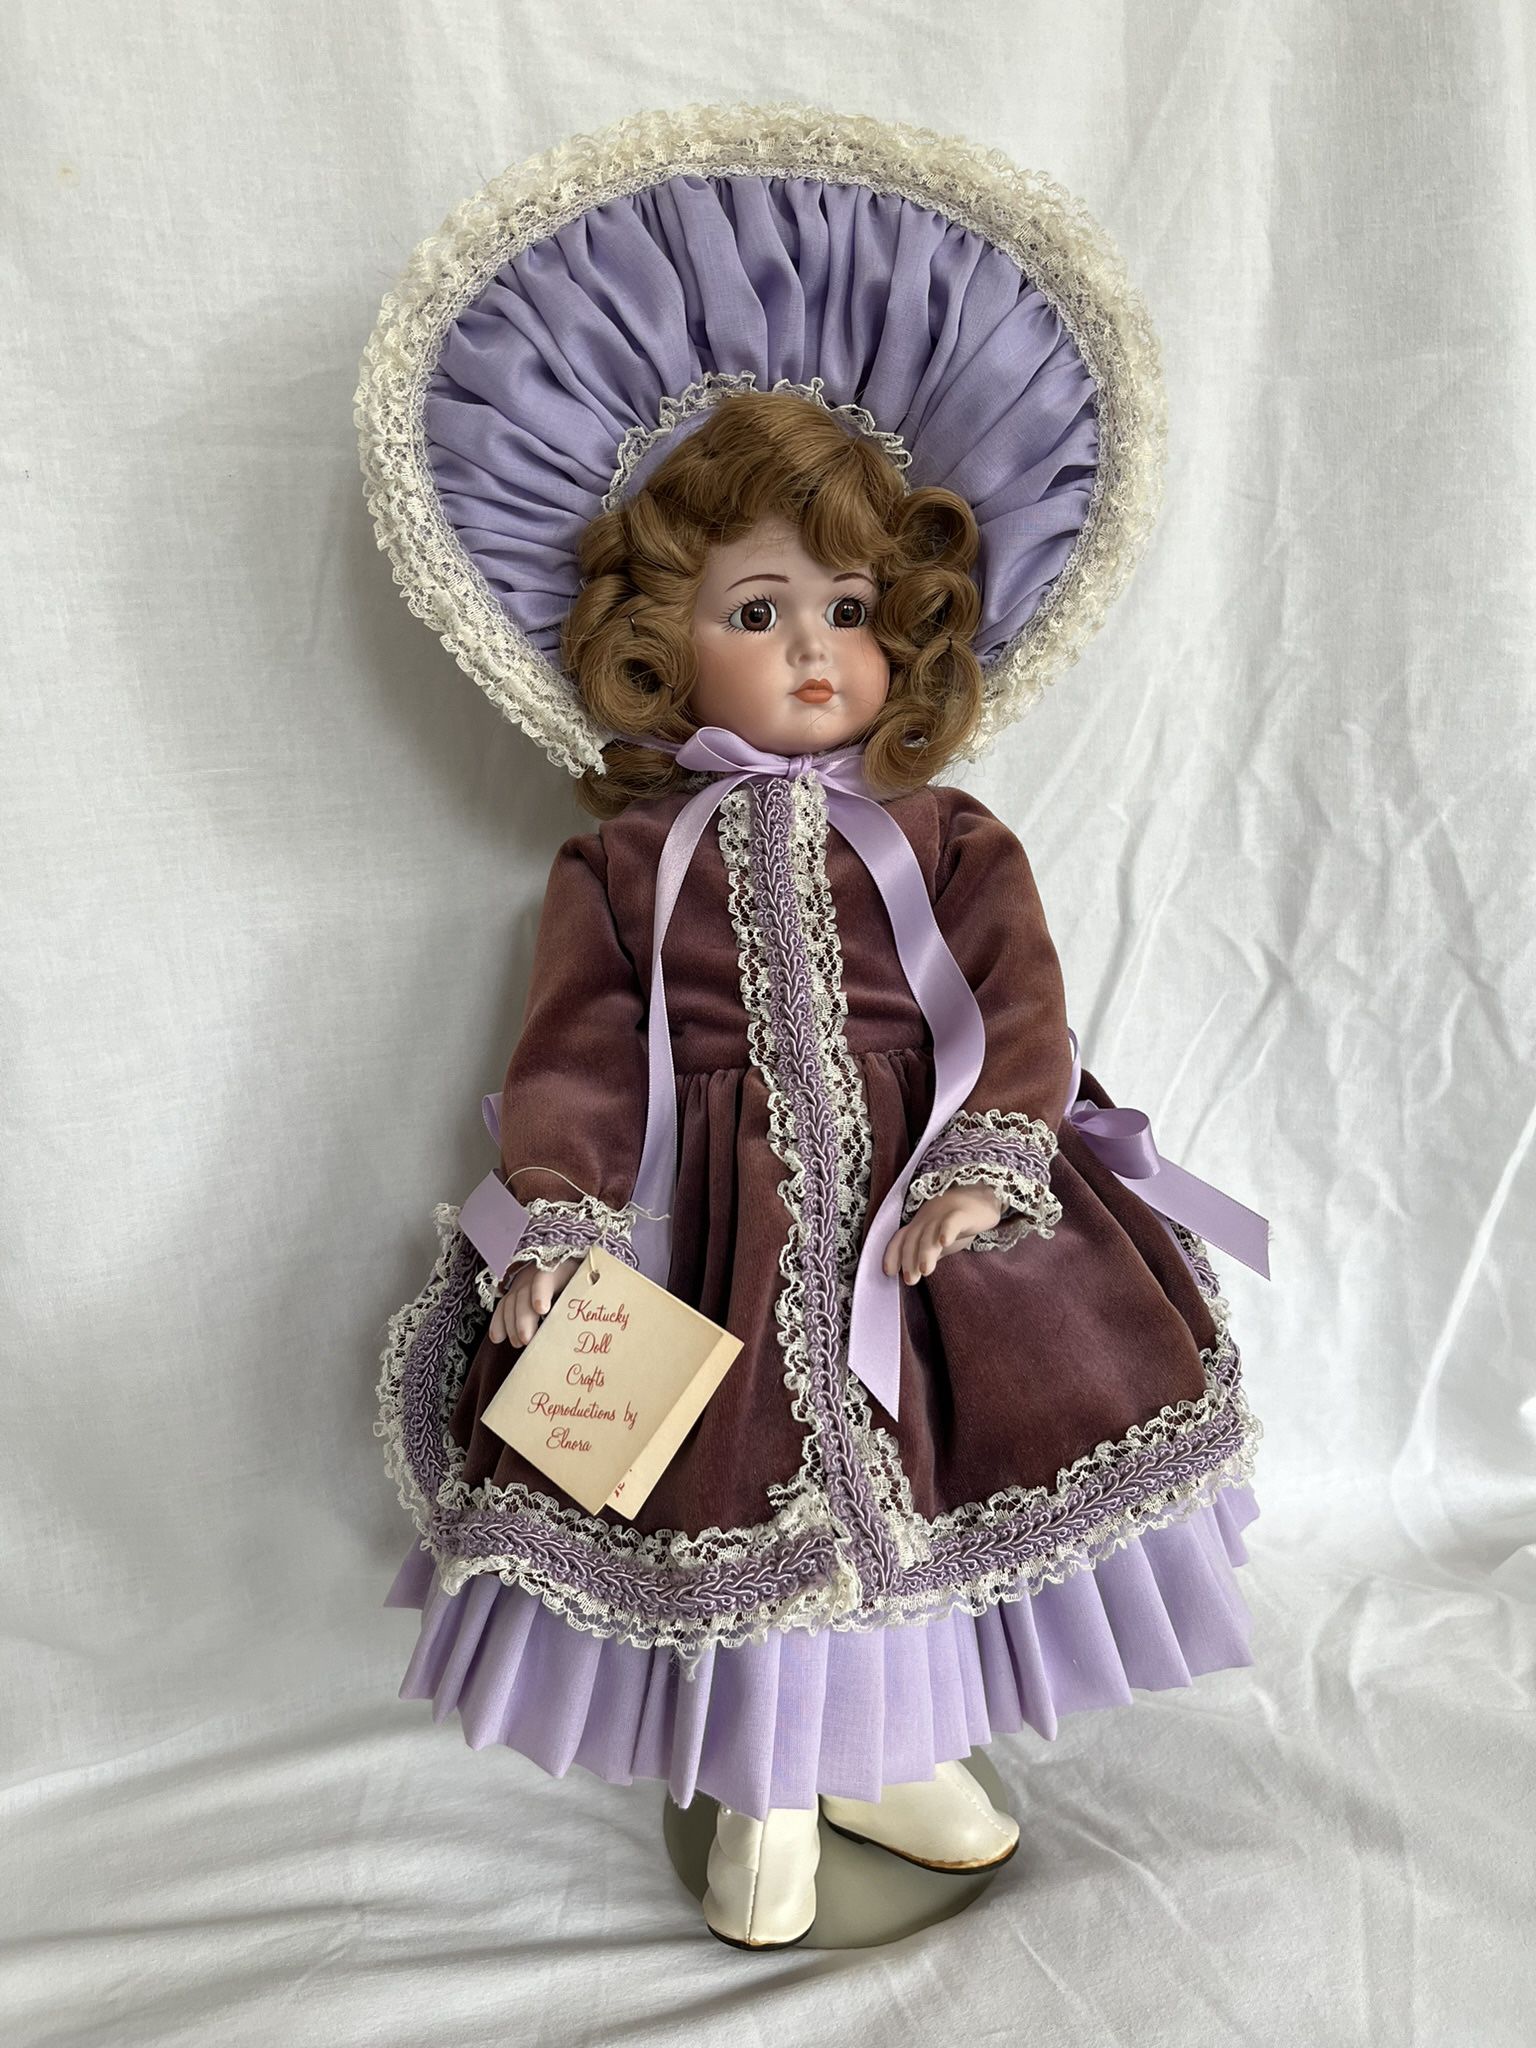 1985 Kentucky Doll Crafts “My Darling” Doll